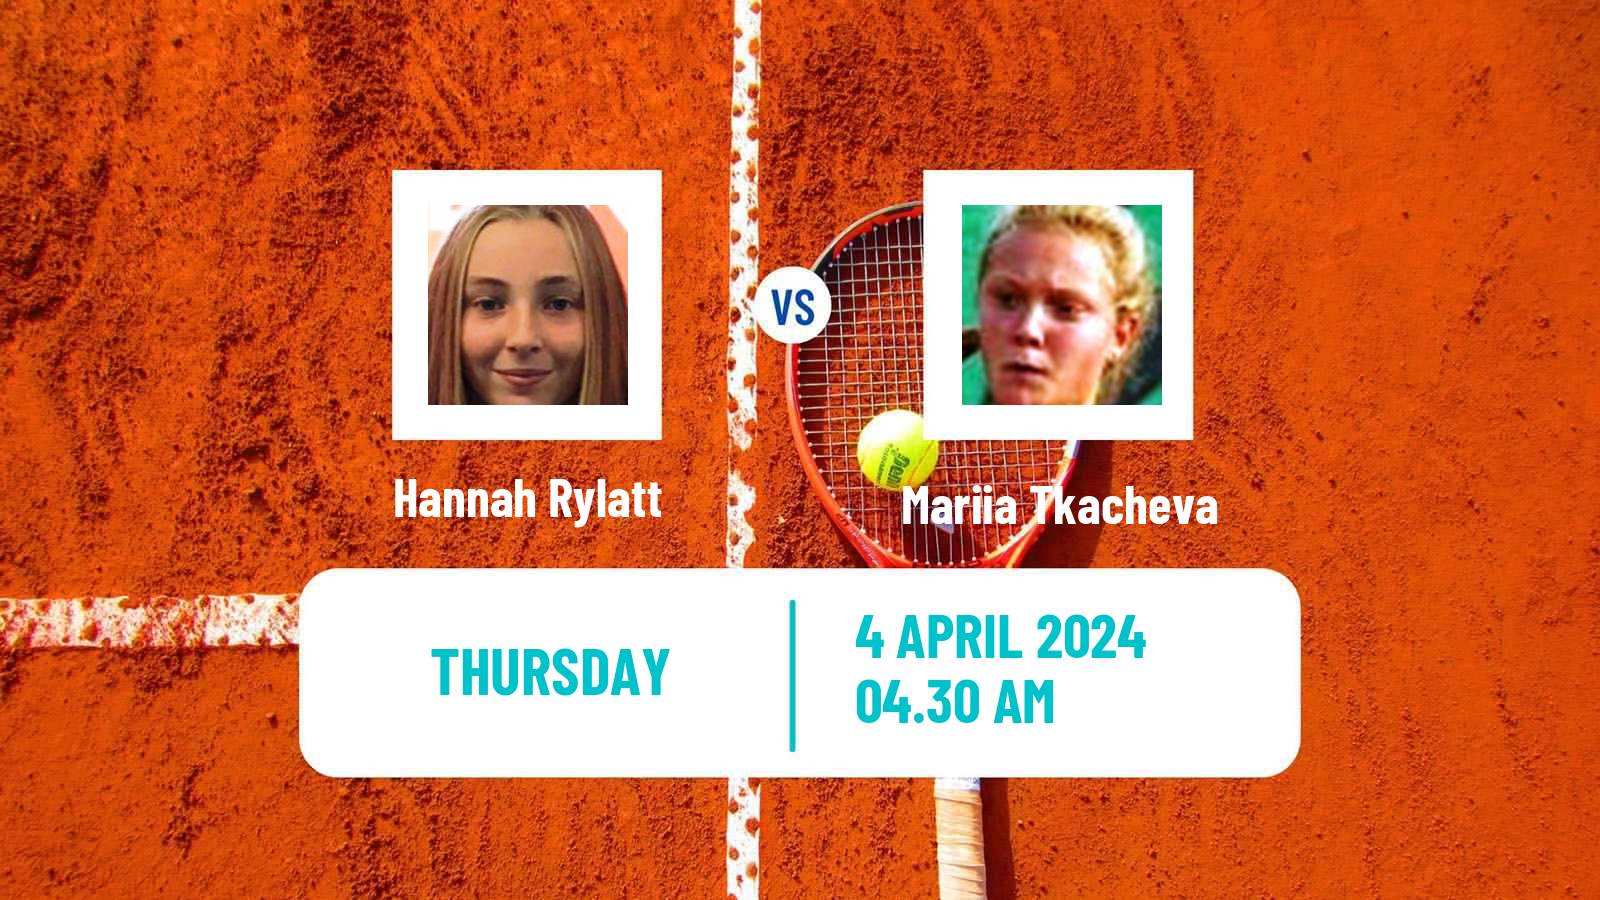 Tennis ITF W15 Monastir 12 Women Hannah Rylatt - Mariia Tkacheva